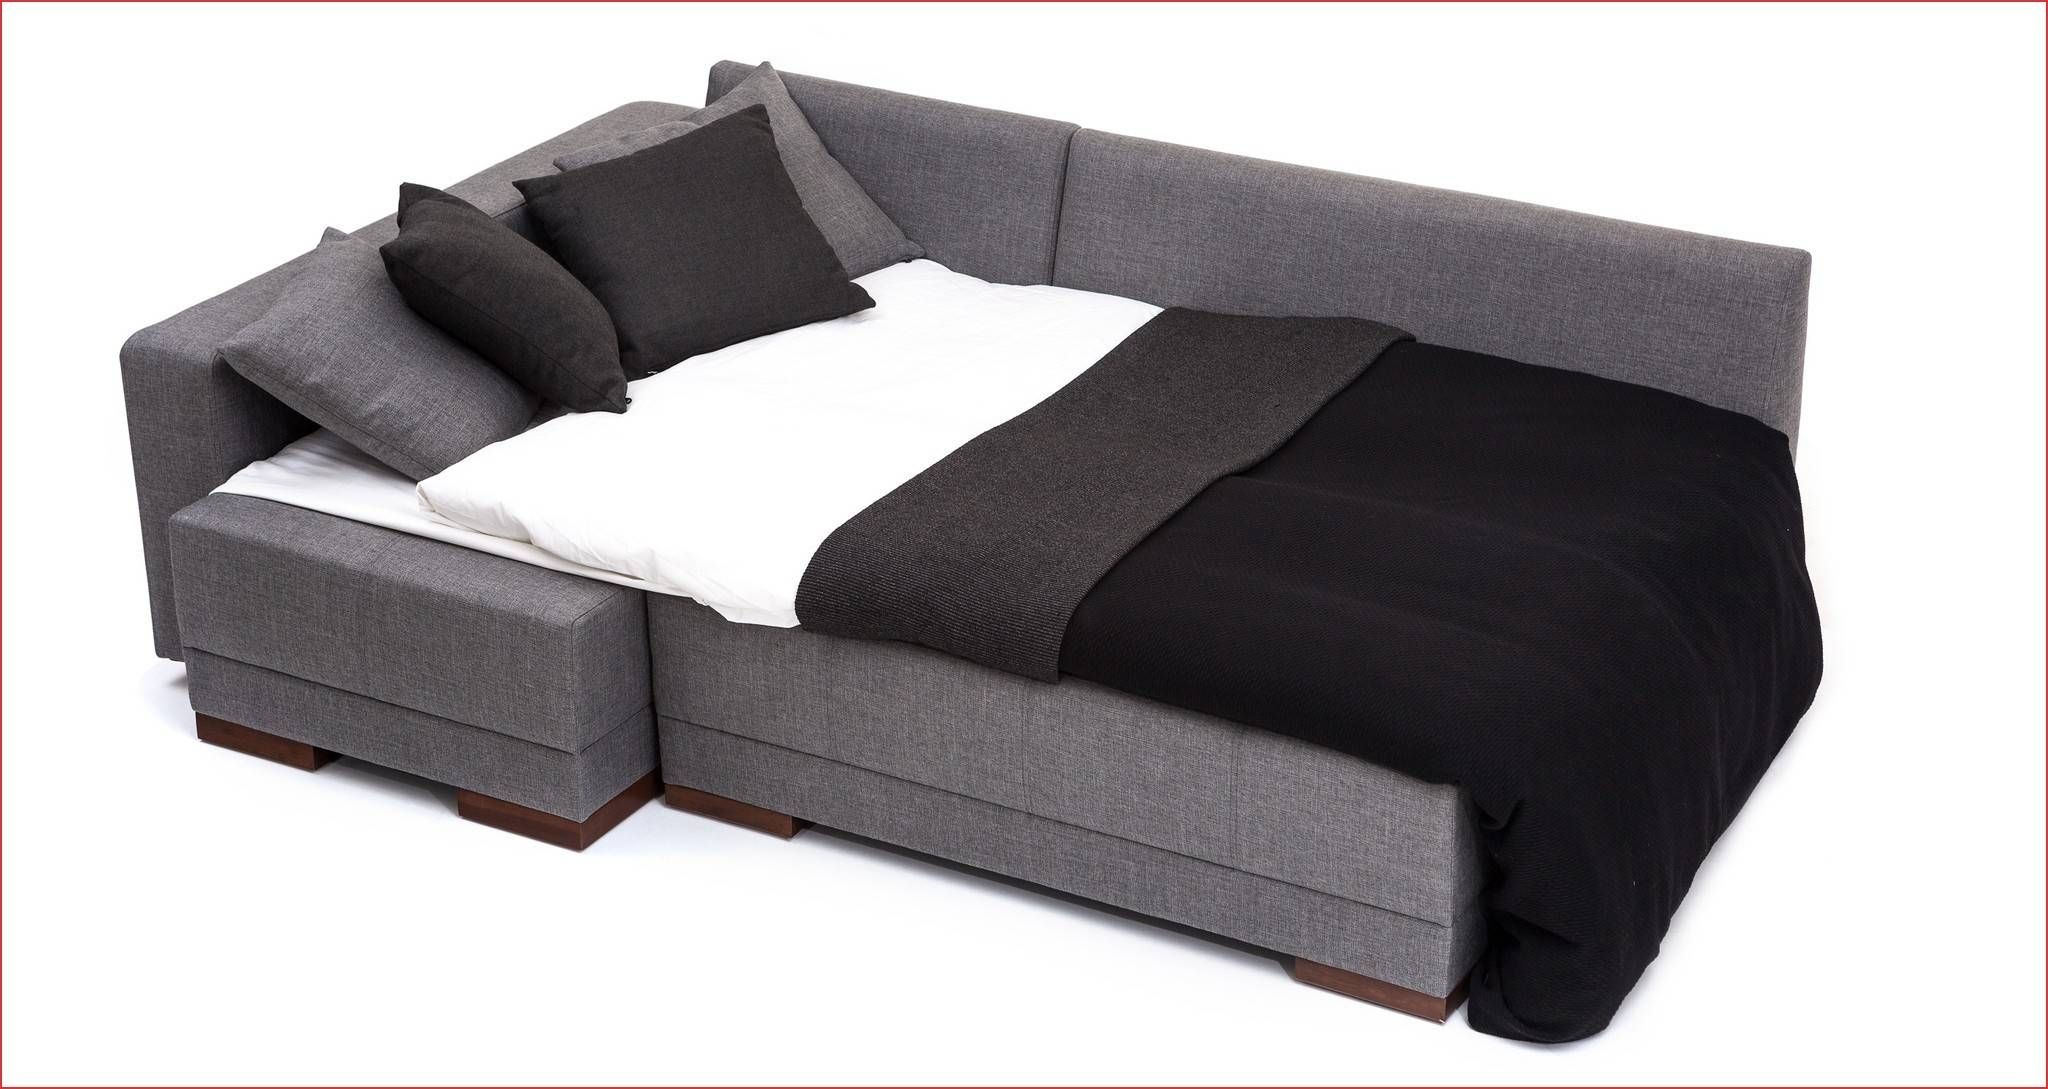 Castro Convertible Sofas Inspirational The Best Jennifer Regarding Castro Convertibles Sofa Beds (View 15 of 15)